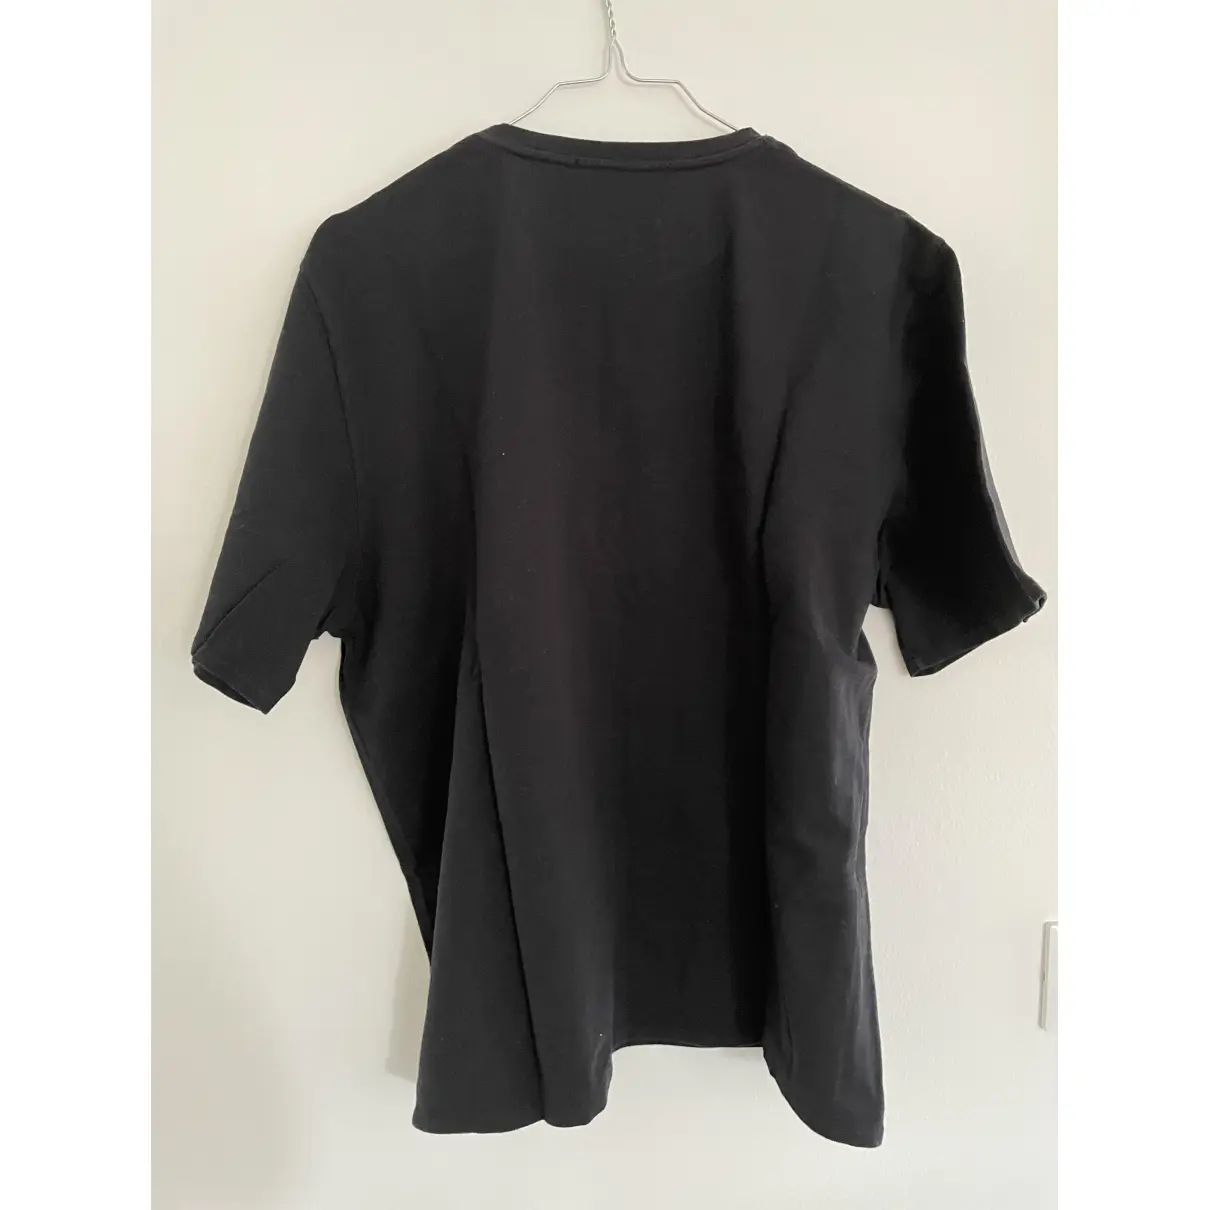 Buy Prada Black Cotton T-shirt online